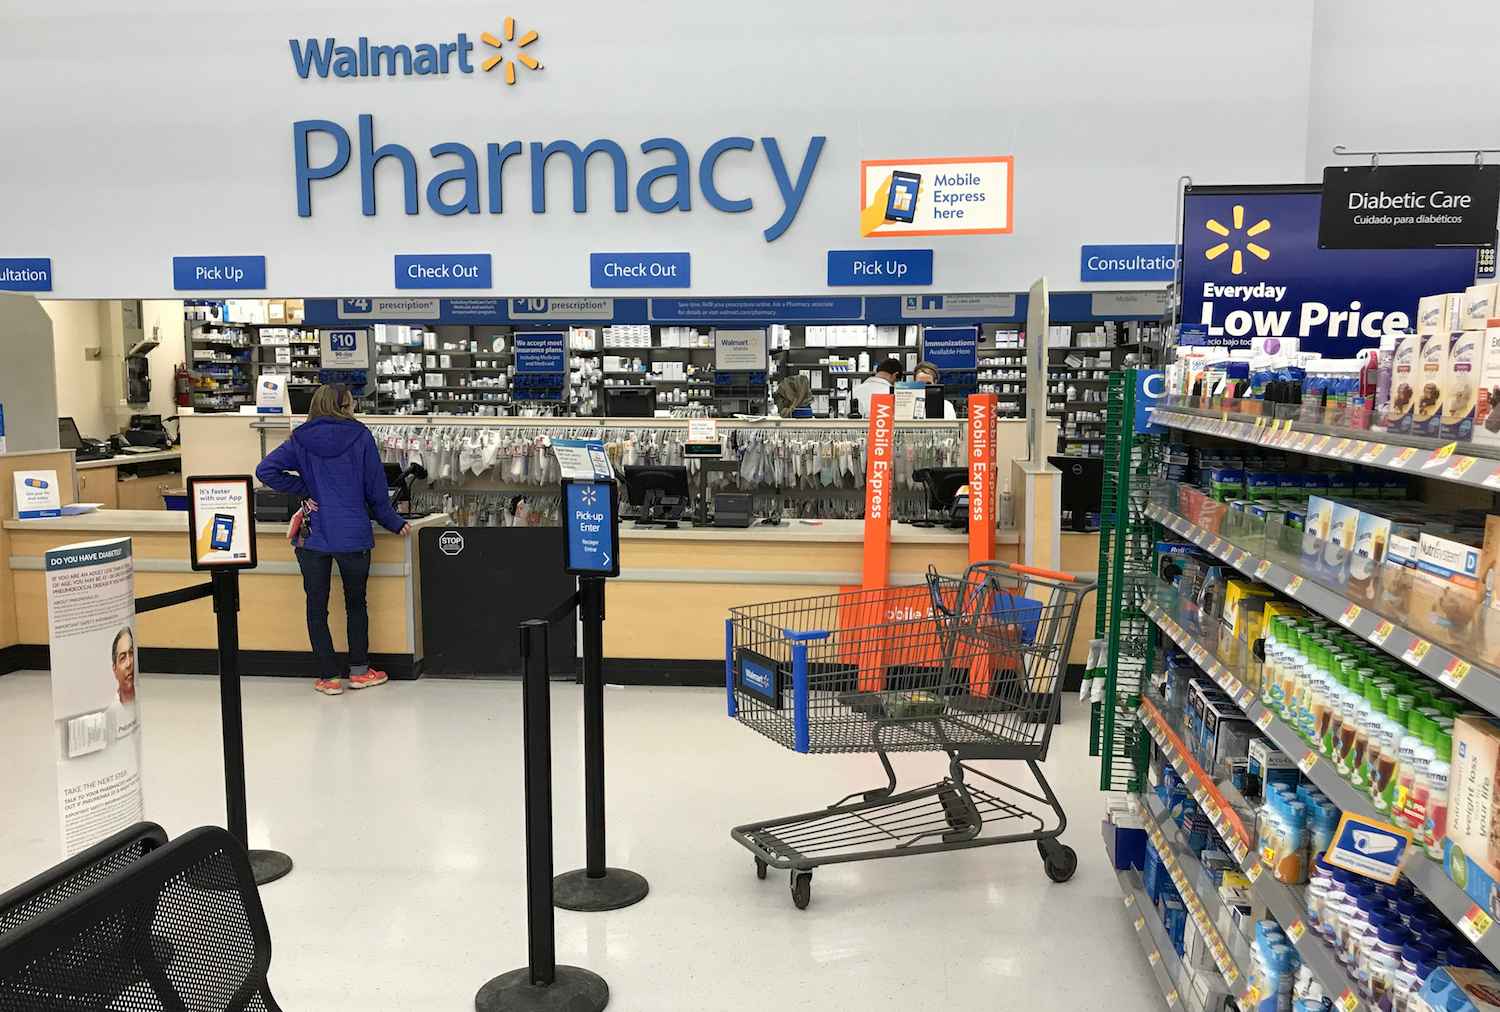 Feds Sue Walmart Over Role in Opioid Crisis | Arkansas Business News | ArkansasBusiness.com